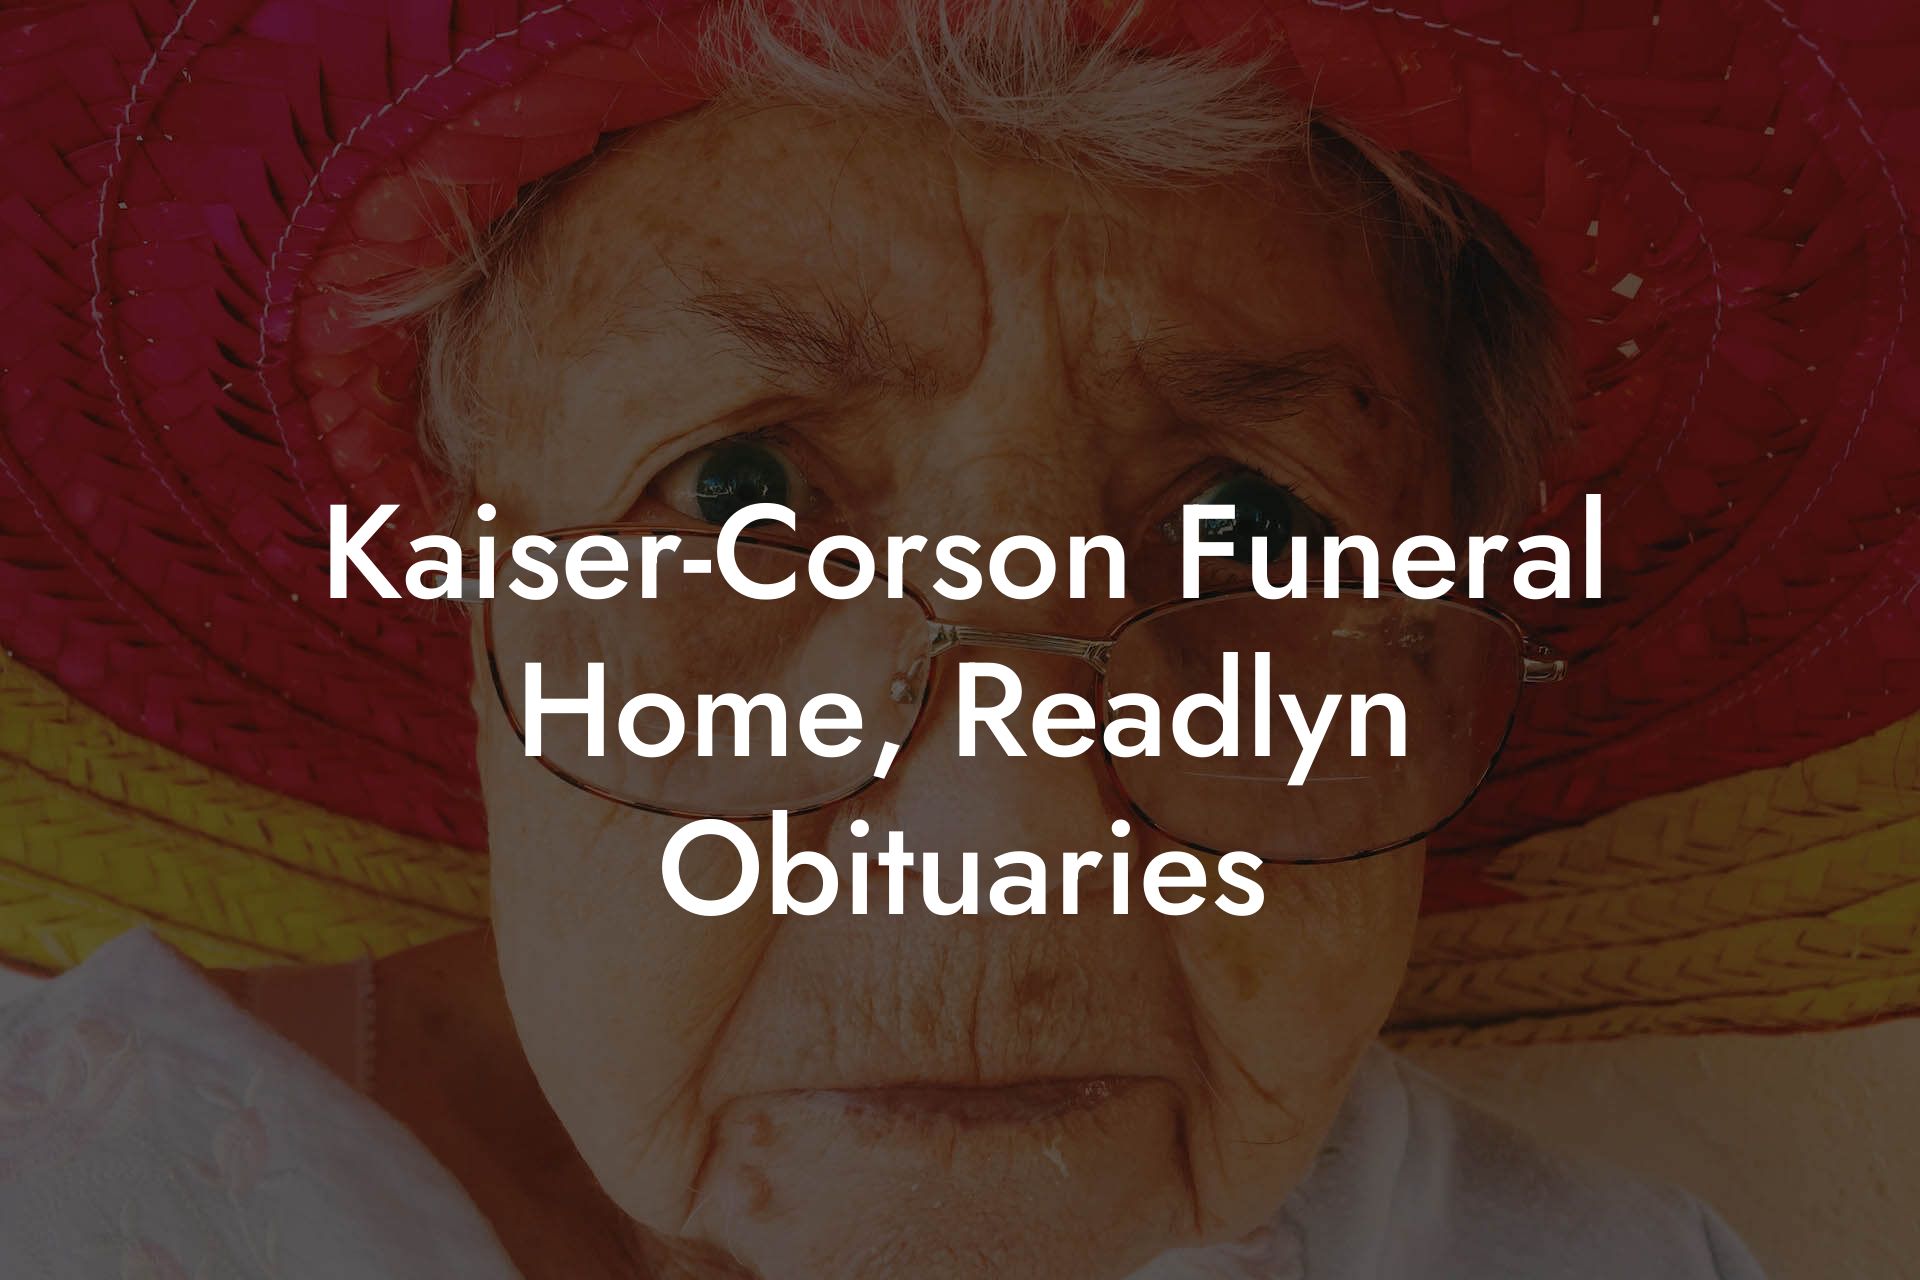 Kaiser-Corson Funeral Home, Readlyn Obituaries